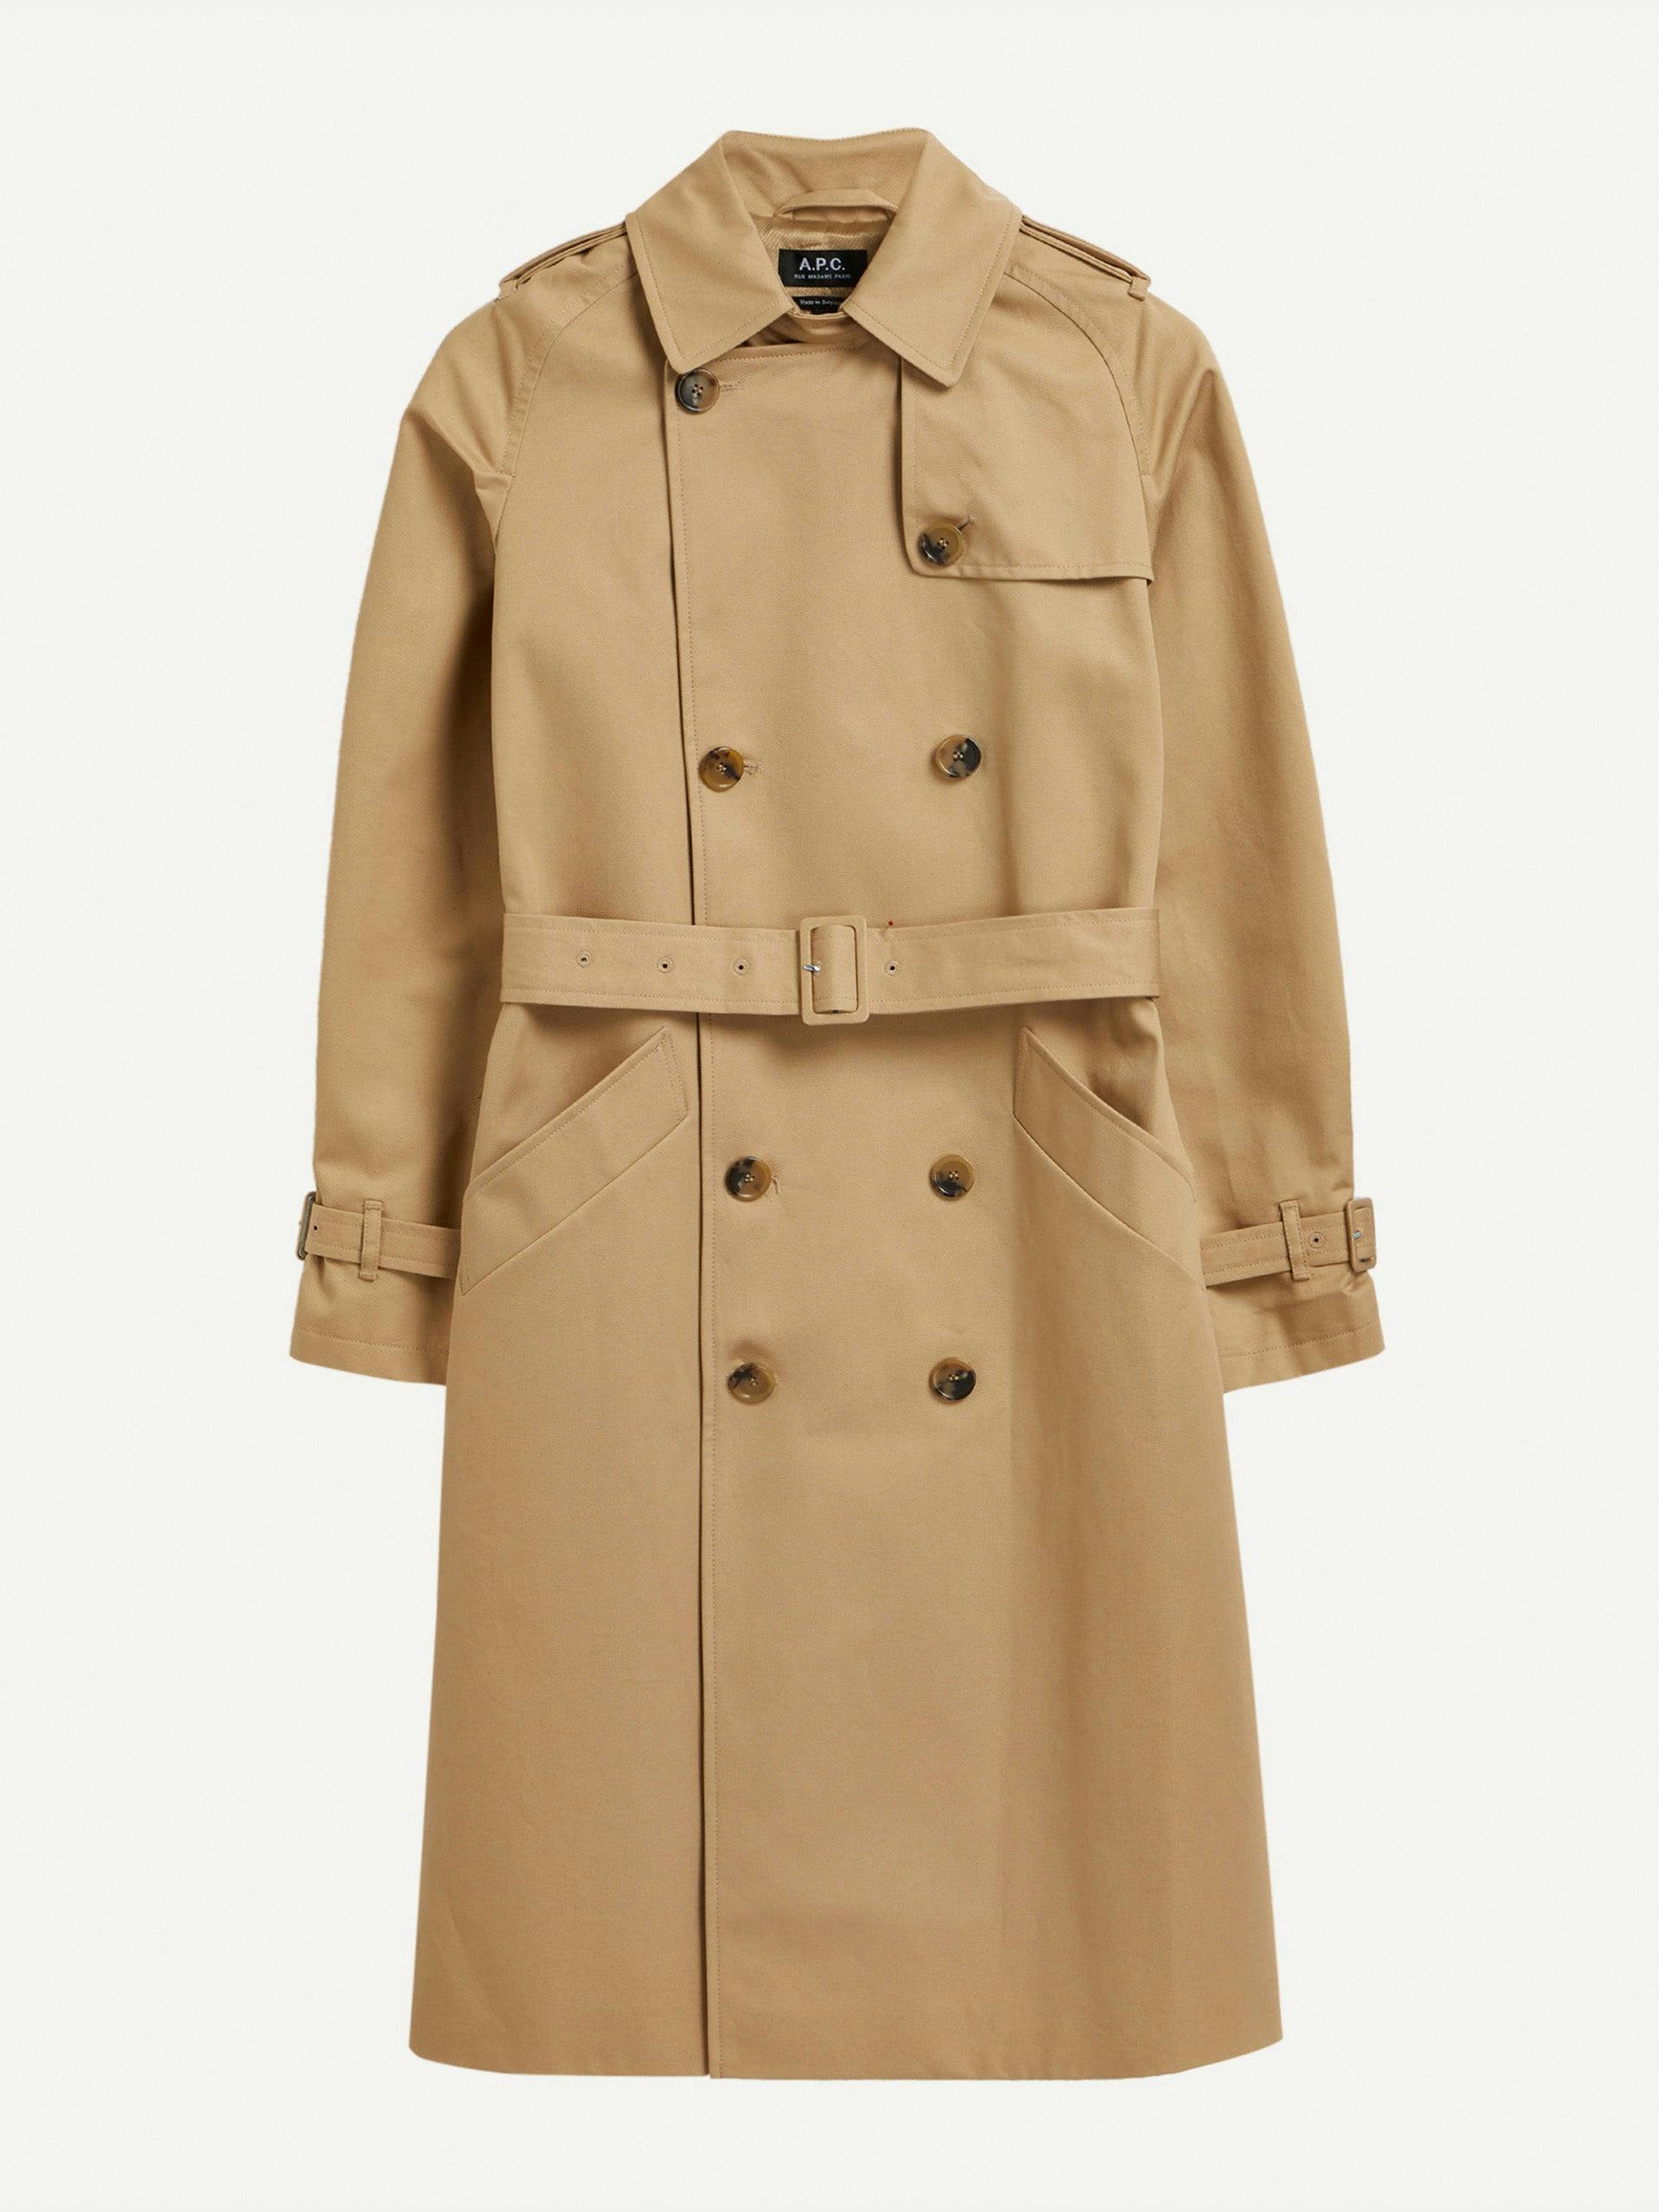 Greta classic trench coat